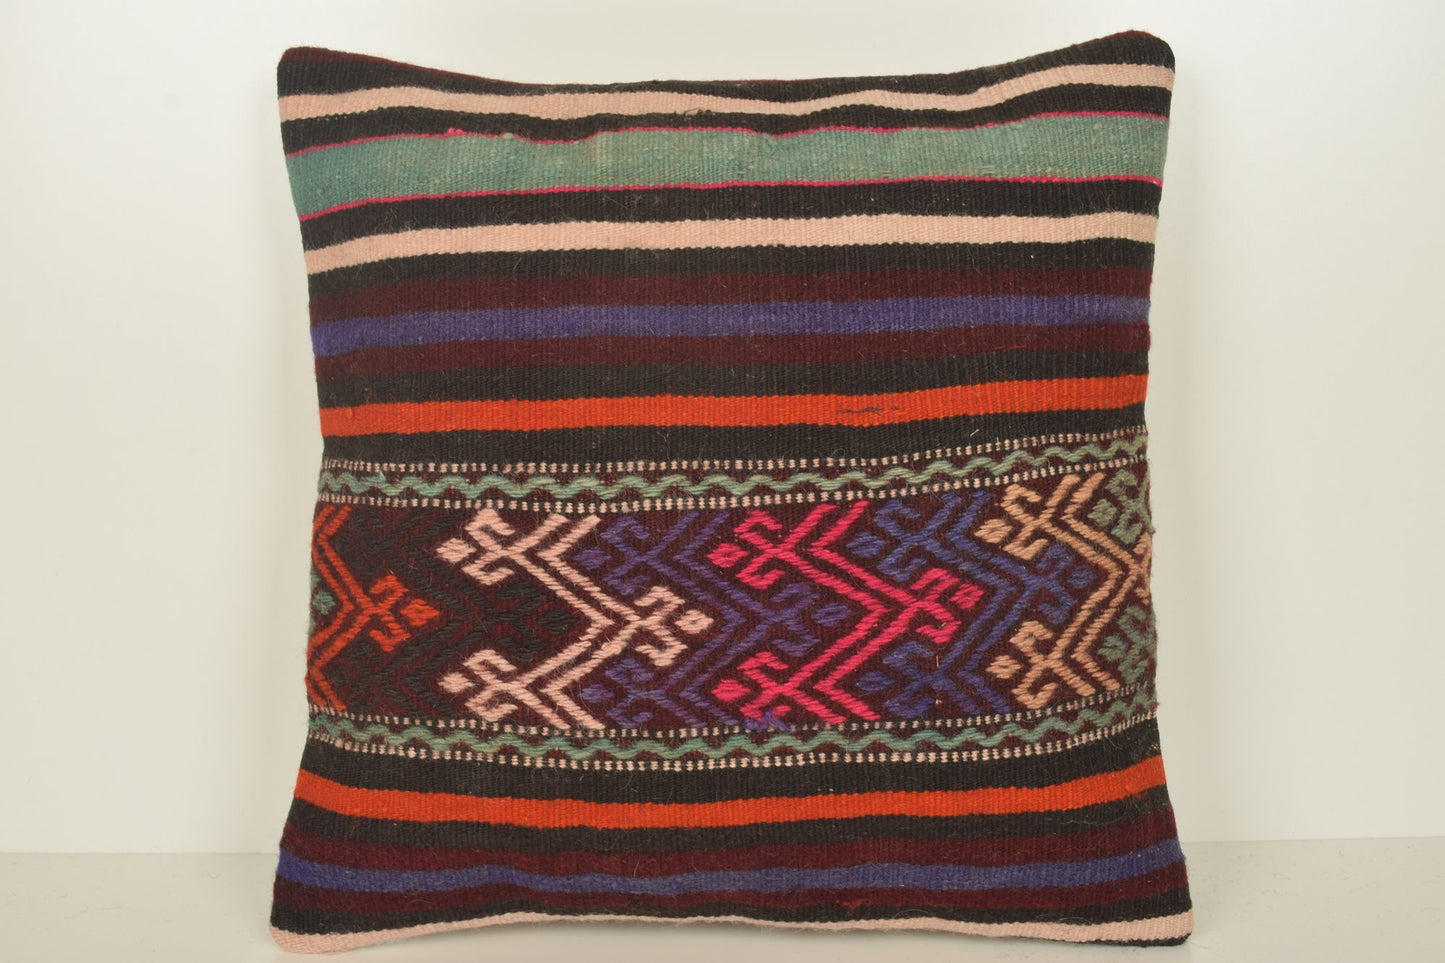 Kilim Pillow Covers made in Turkey C01372 18x18 Urban Clean Crochet